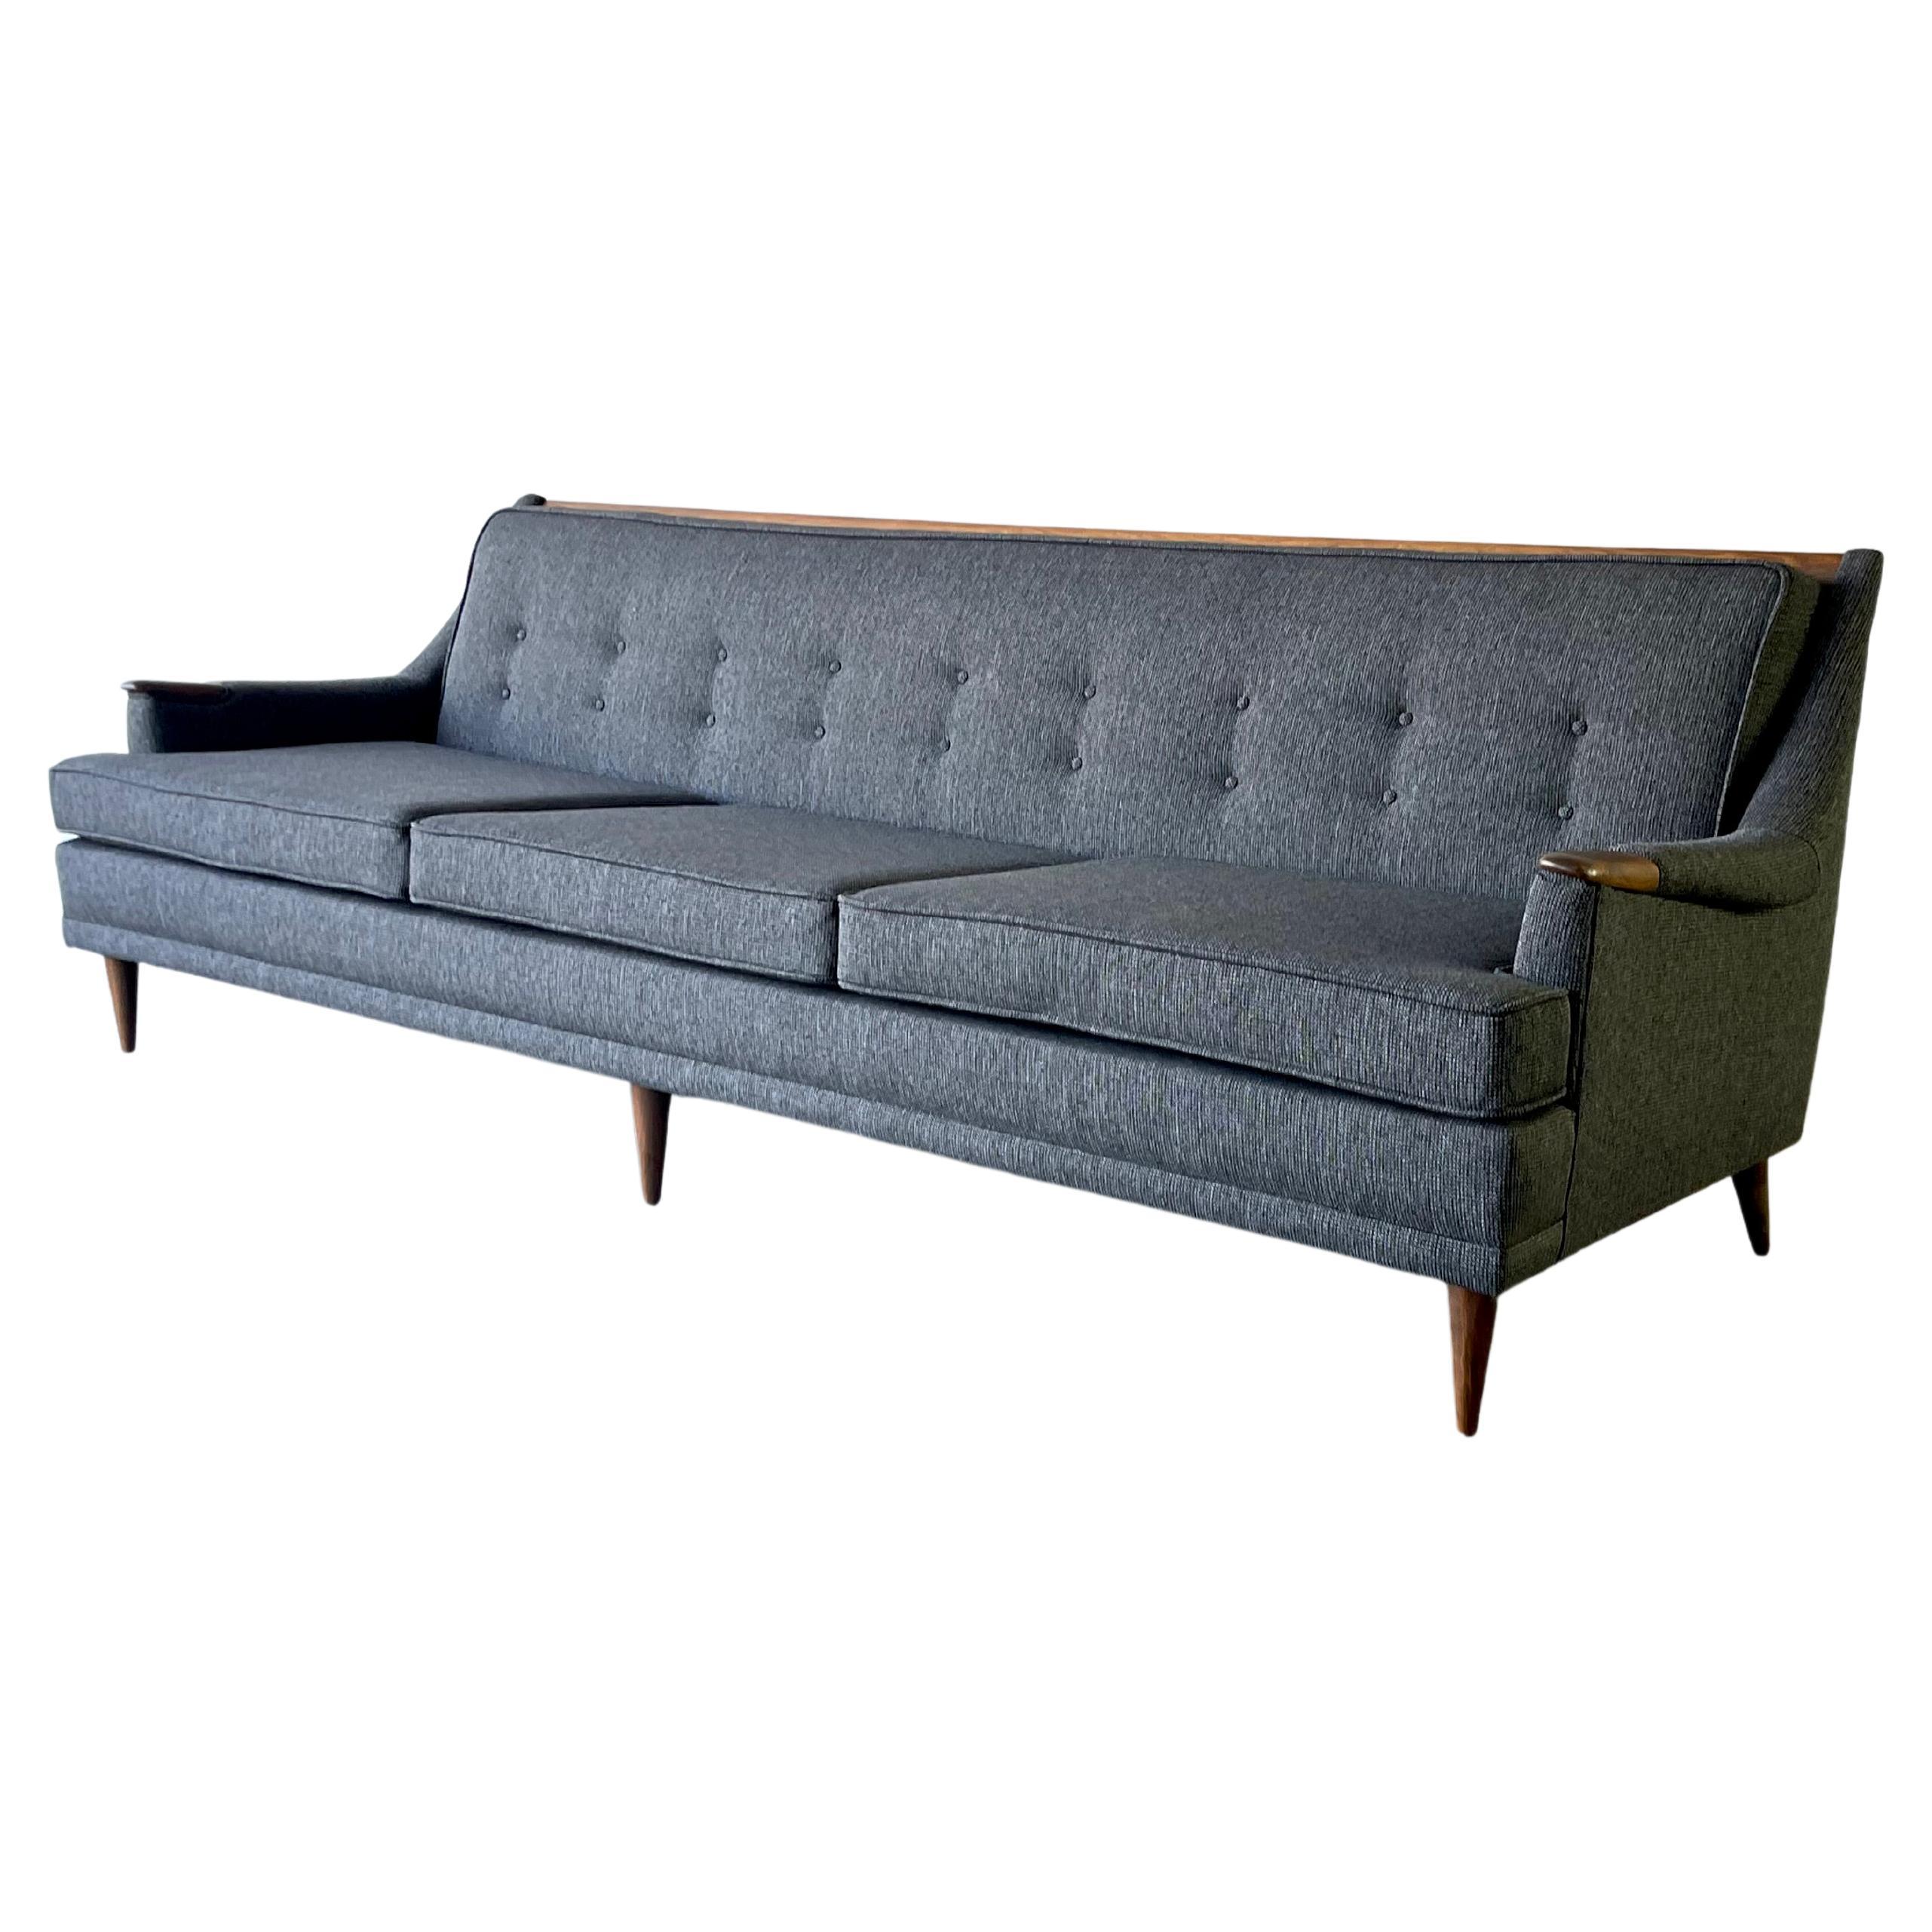 Kroehler Sofa - 5 For Sale on 1stDibs | vintage kroehler sofa, kroehler  sofa vintage, vintage kroehler couch